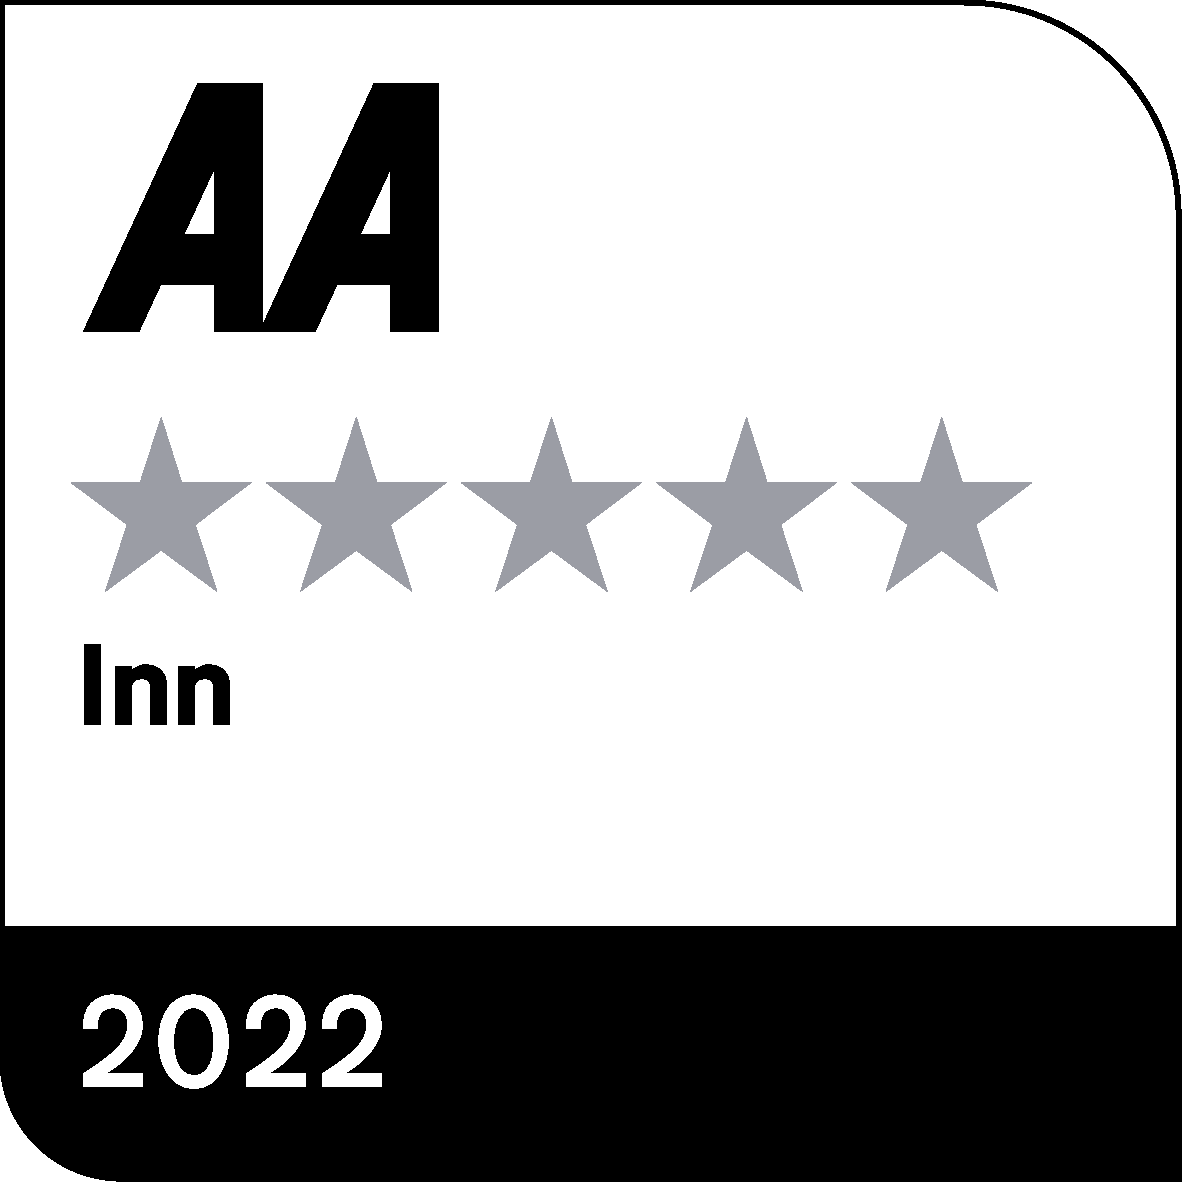 AA 5 Silver Star Inn 2022 Transparent